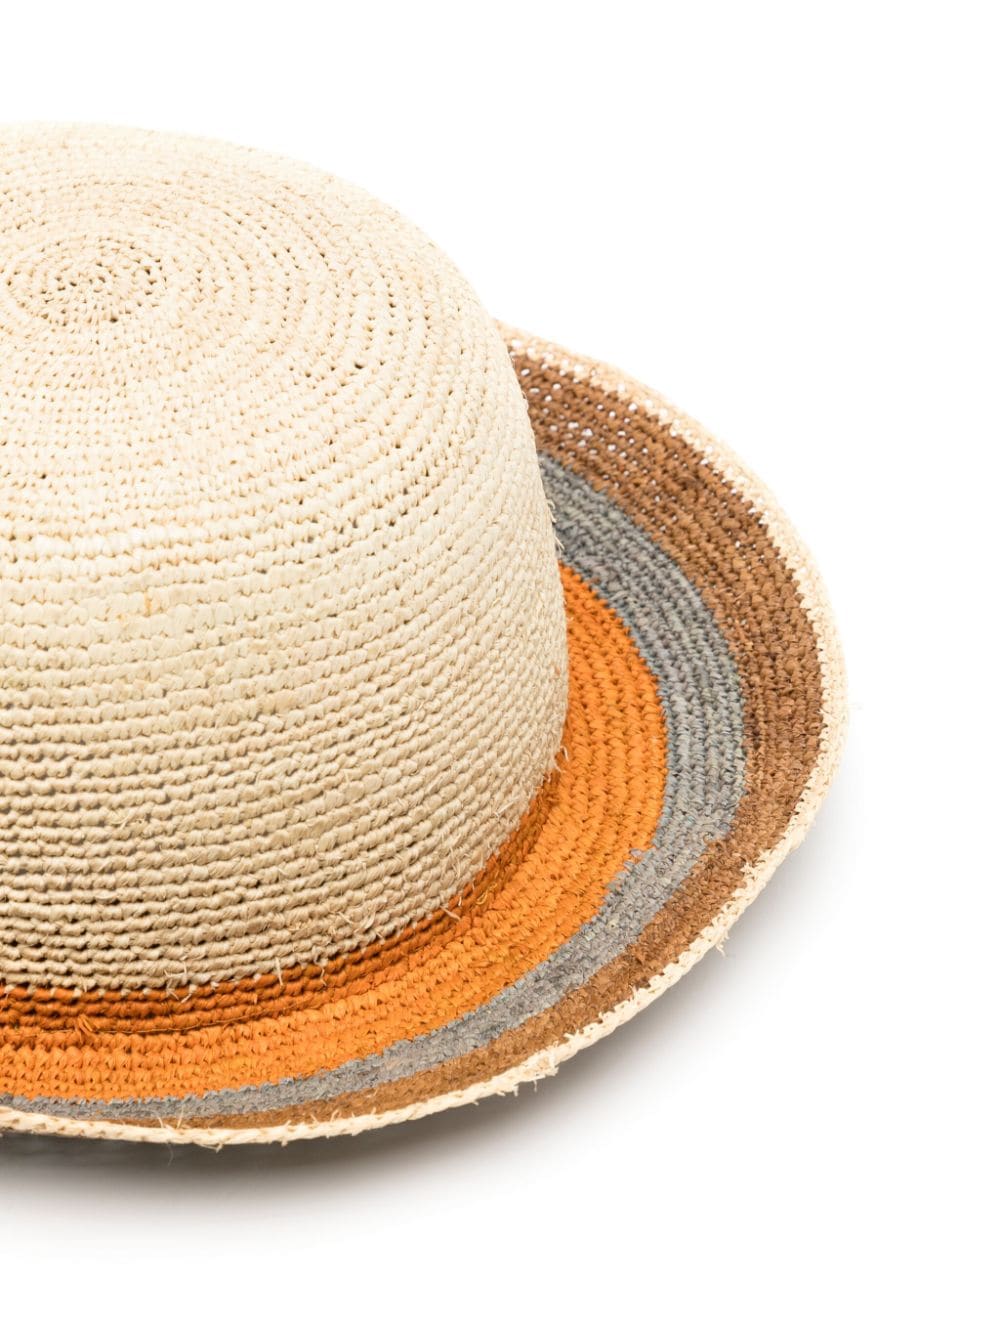 Paul Smith striped wide-brim straw hat - Beige